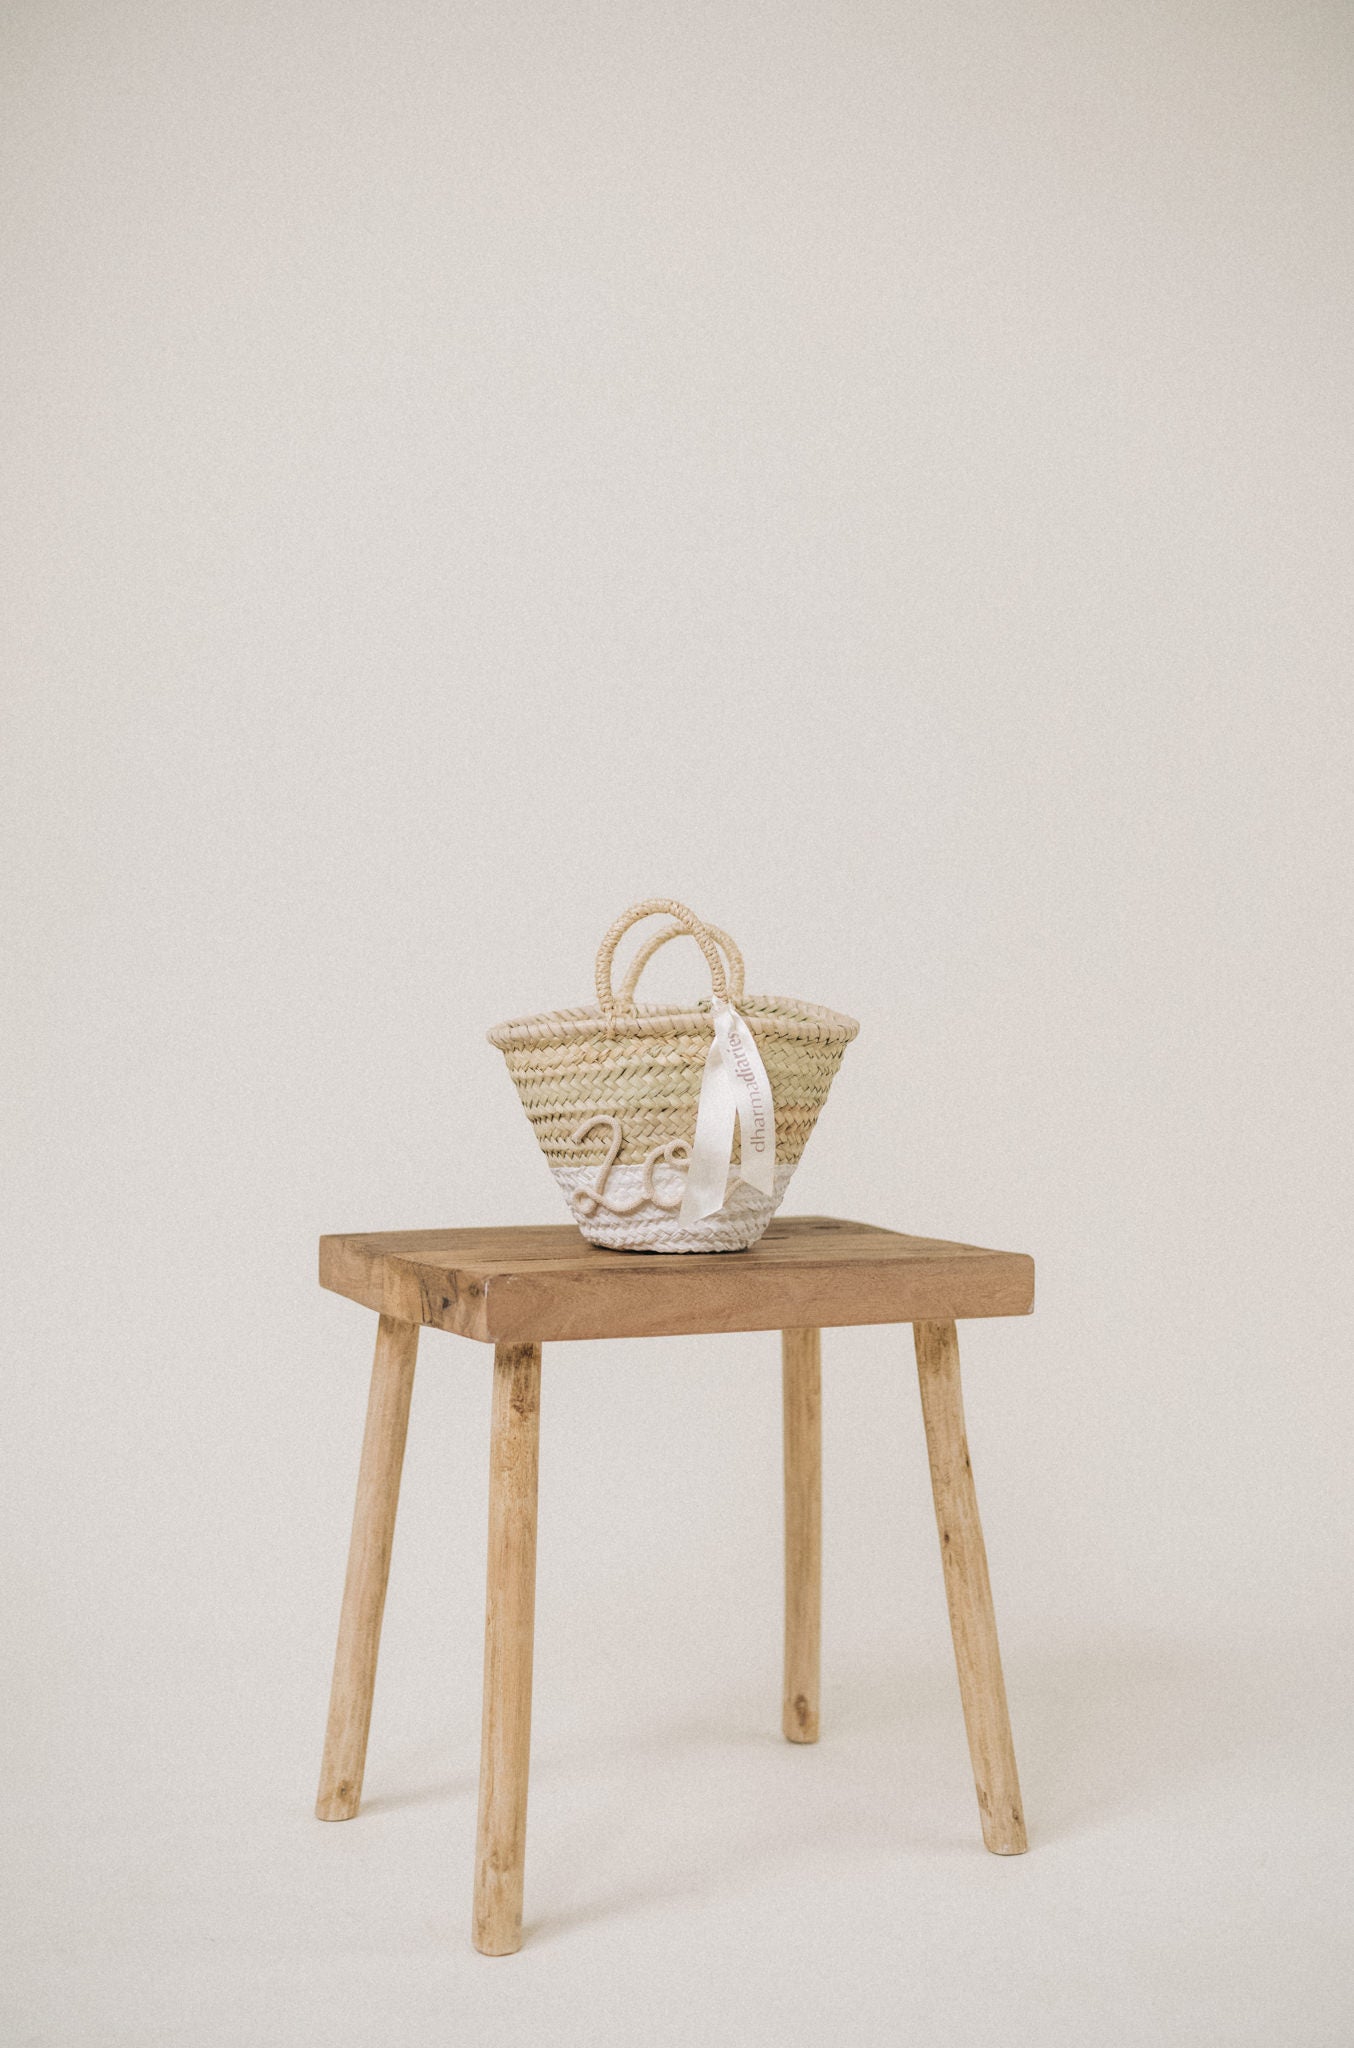 The Mini Lettering Basket